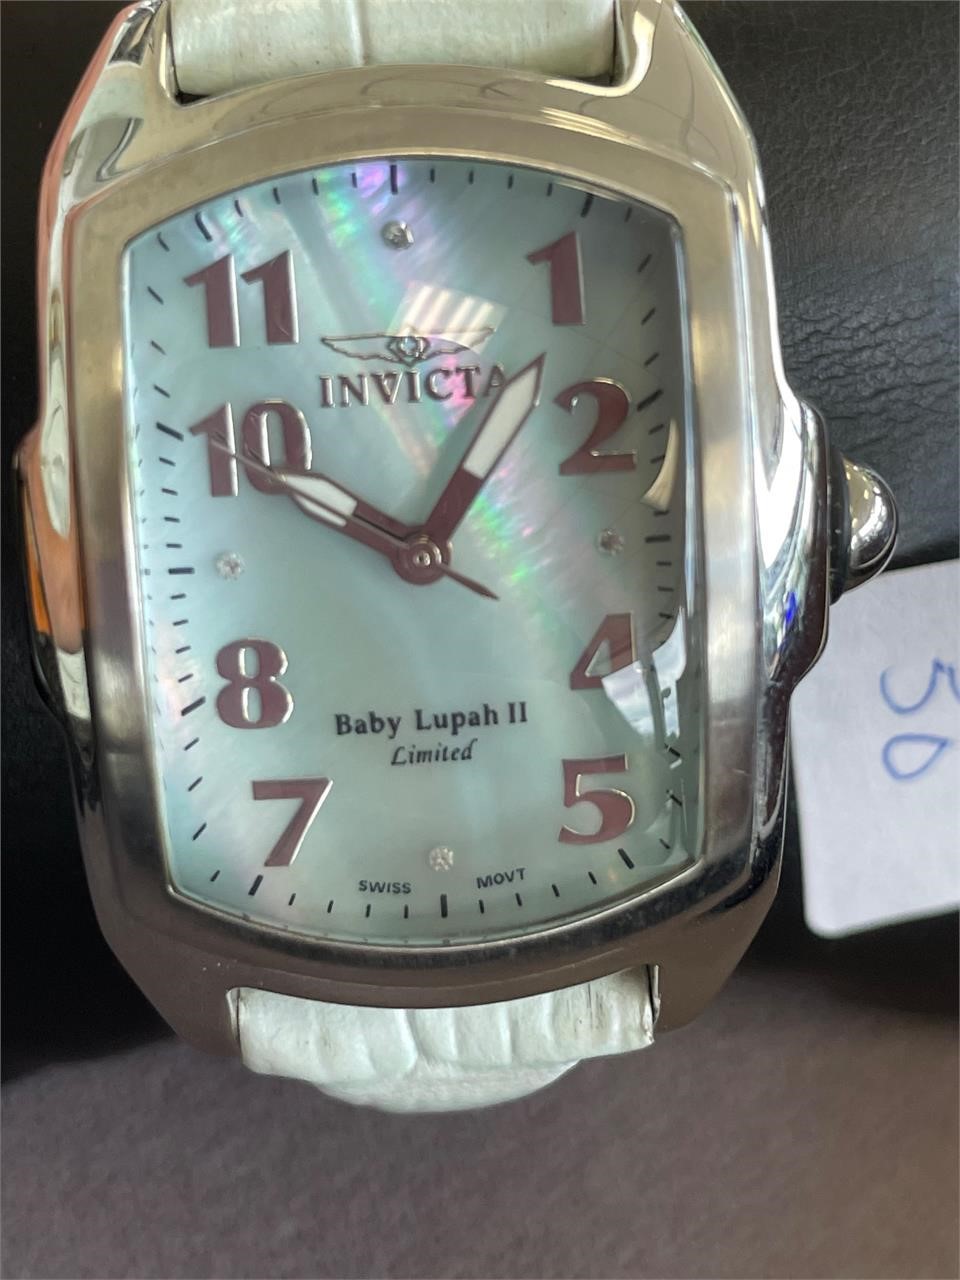 Invicta Baby Lupah II Limited Watch